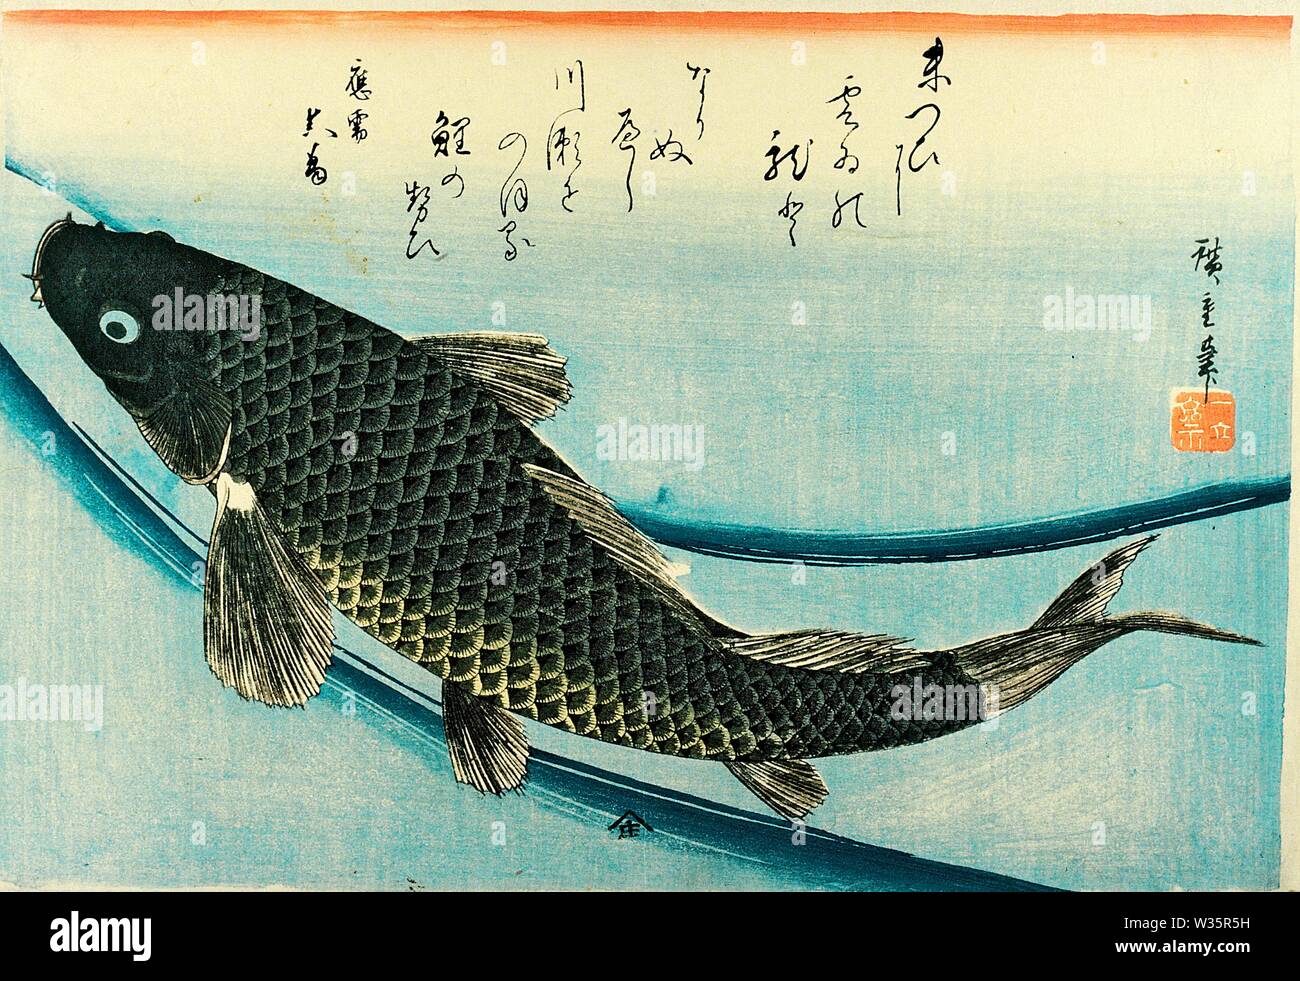 鯉 Koi (CARPE) estampe de Utagawa Hiroshige la série Uozukushi (chaque variété de poissons ou un banc de poissons) circa 1830s ou 40s Banque D'Images